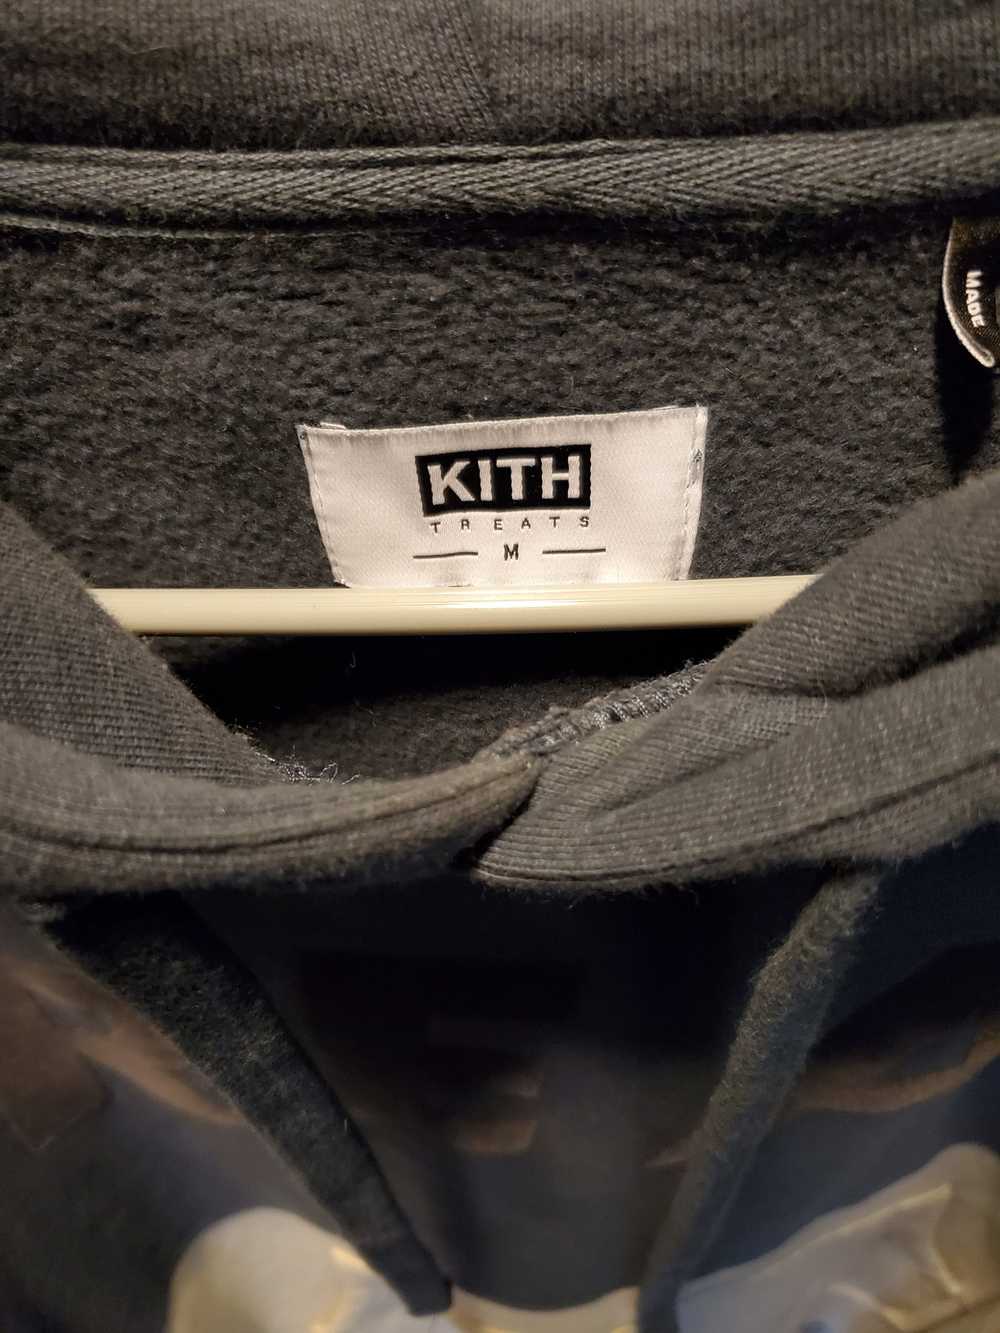 Kith Kith Treats Triblock Hoodie Shark Size Medium - image 2